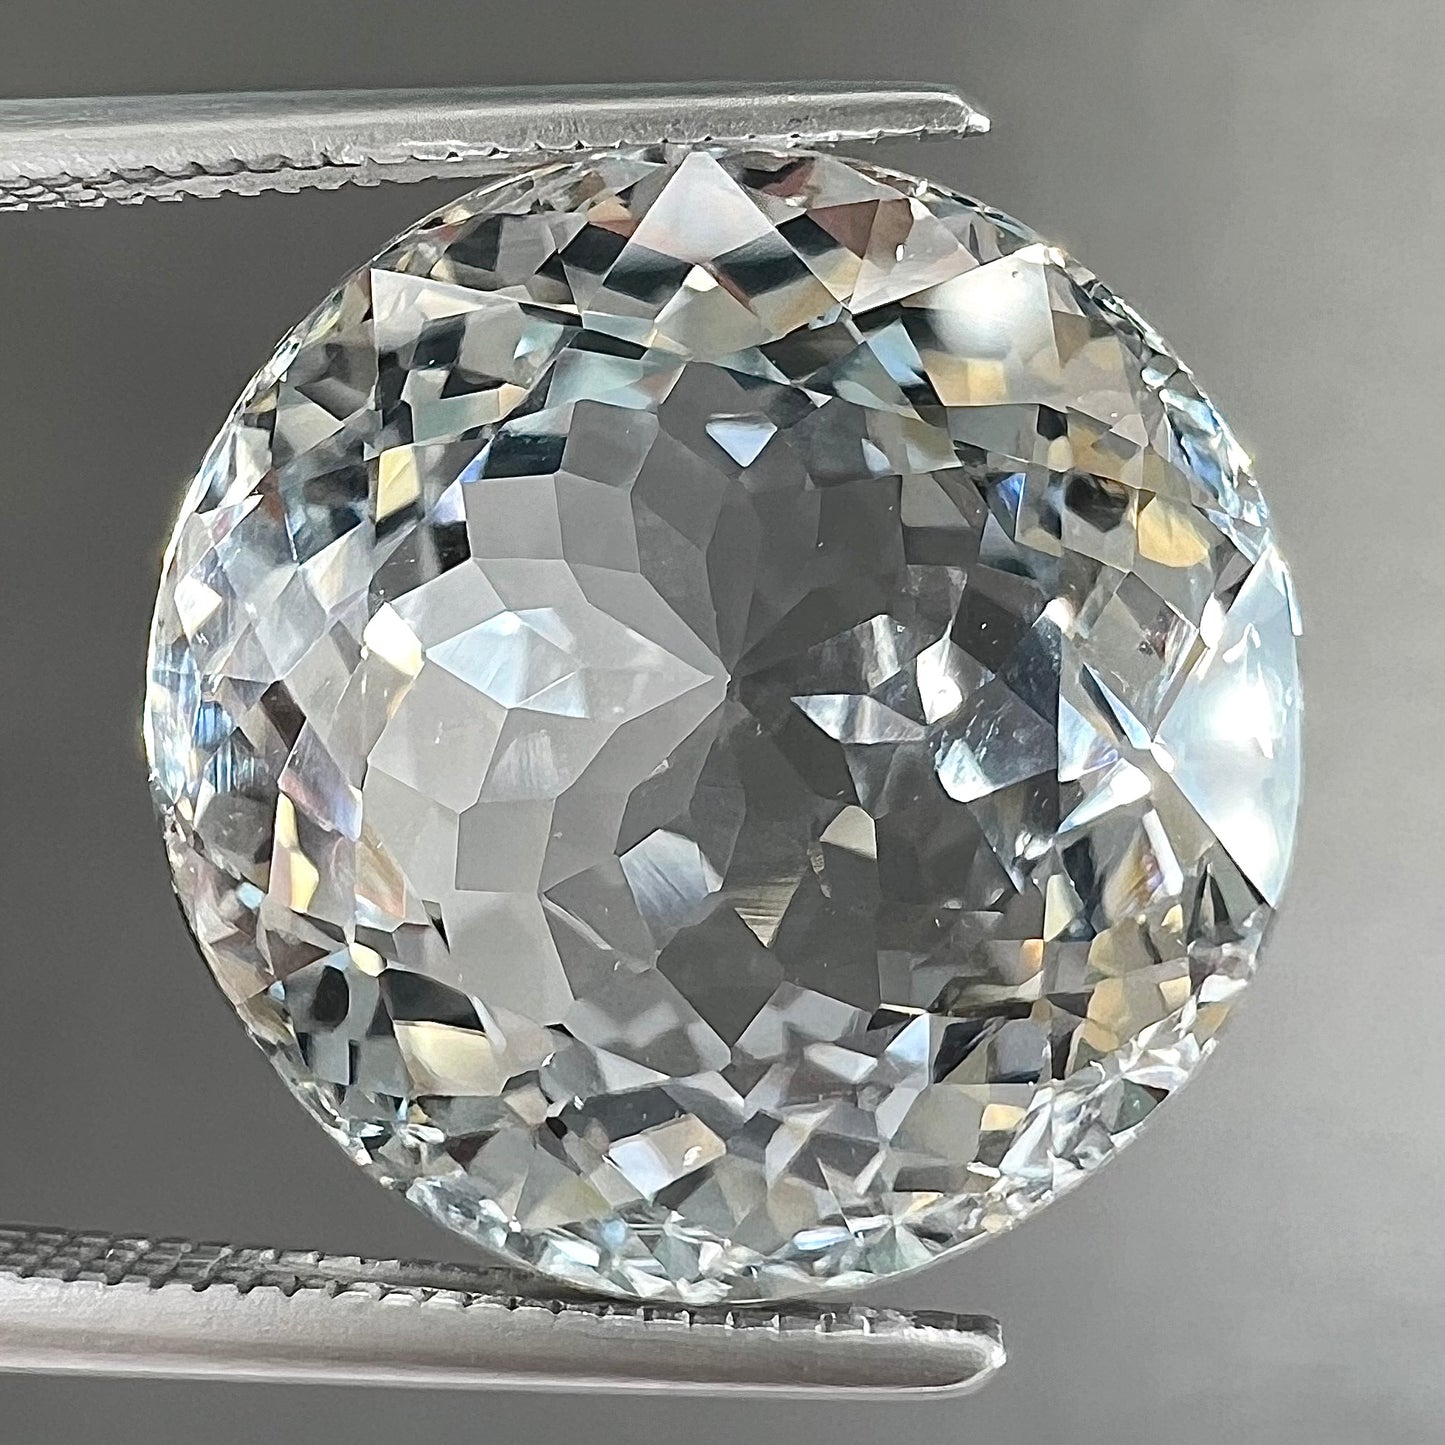 A large, round brilliant cut white topaz gemstone.